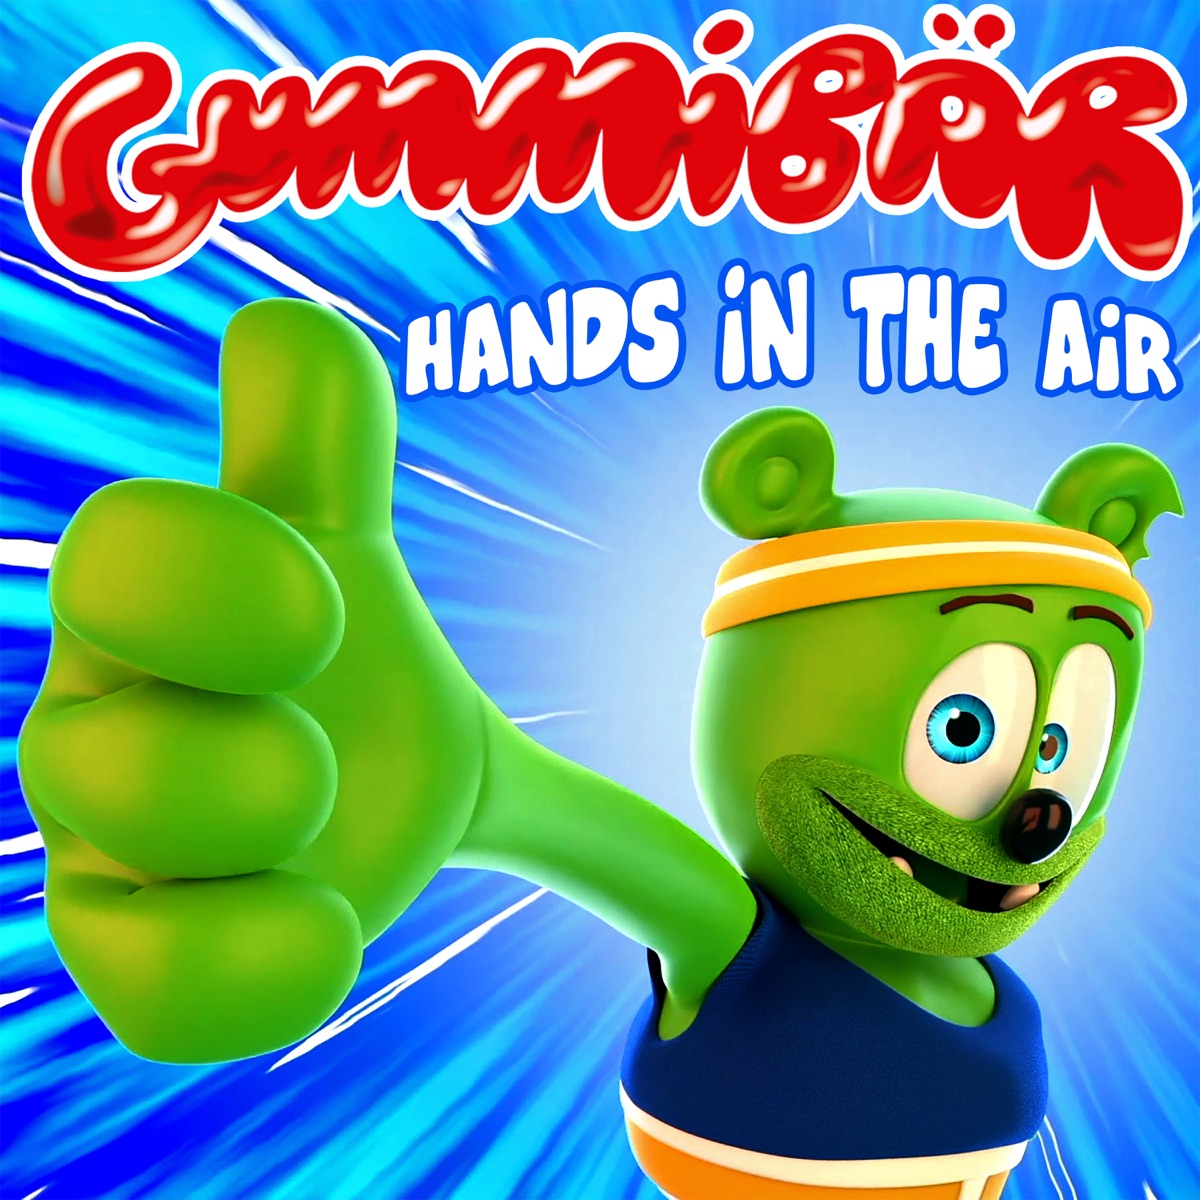  The Gummy Bear Song International Club Mixes : Gummibär:  Digital Music